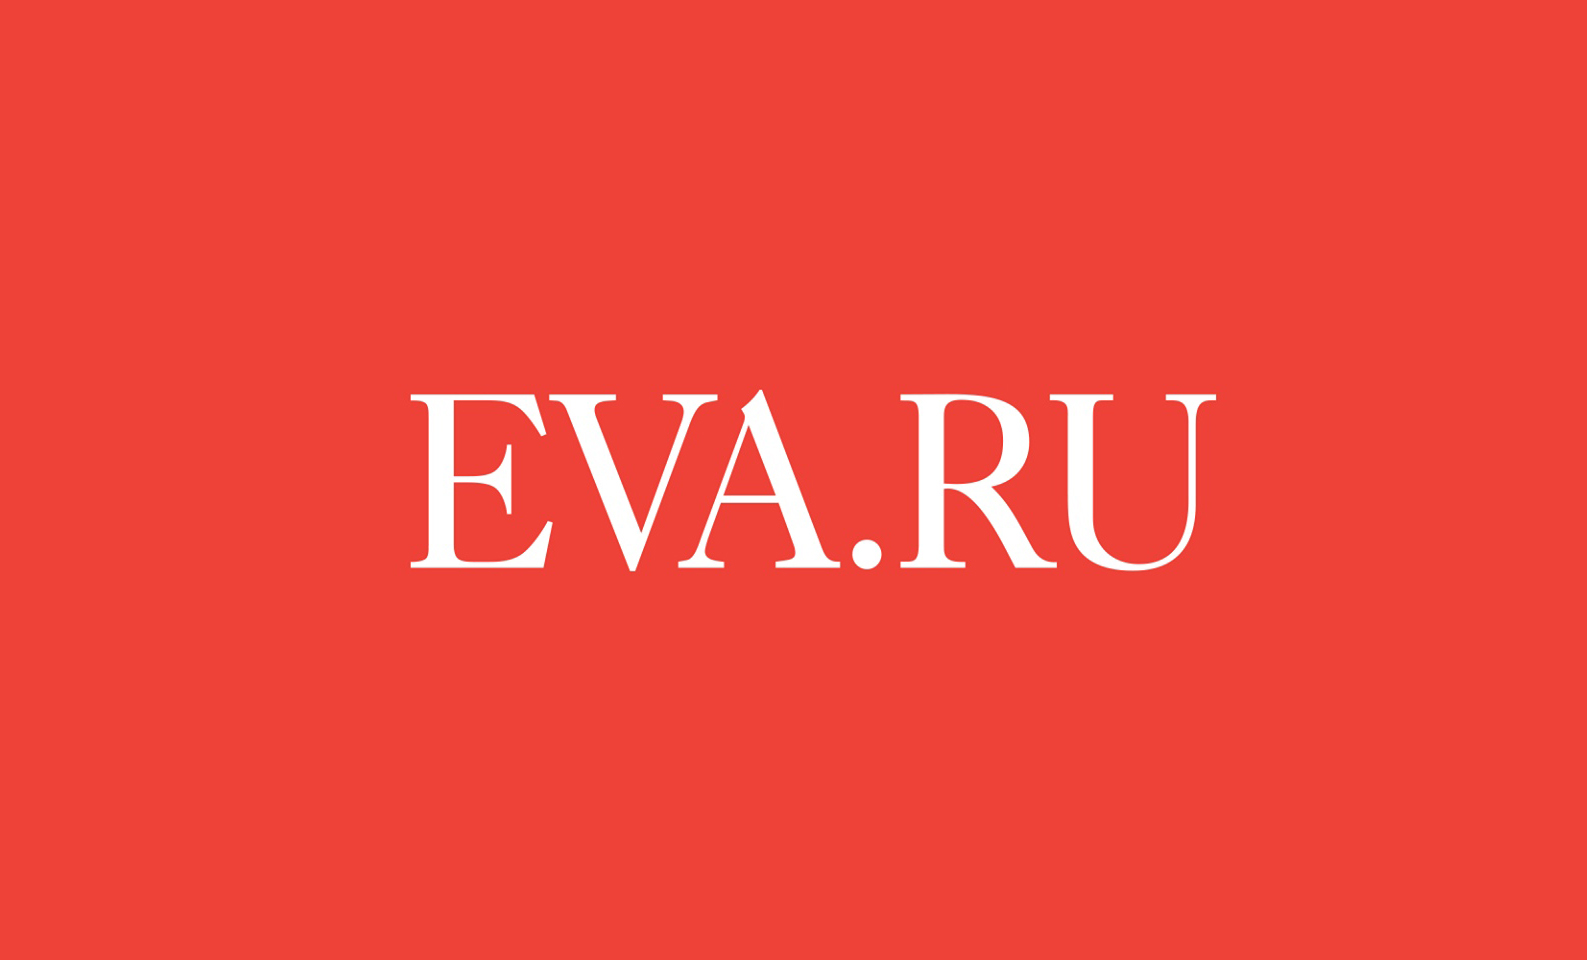 Https edu eva sdo. Вару на аву. Eva.ru логотип.